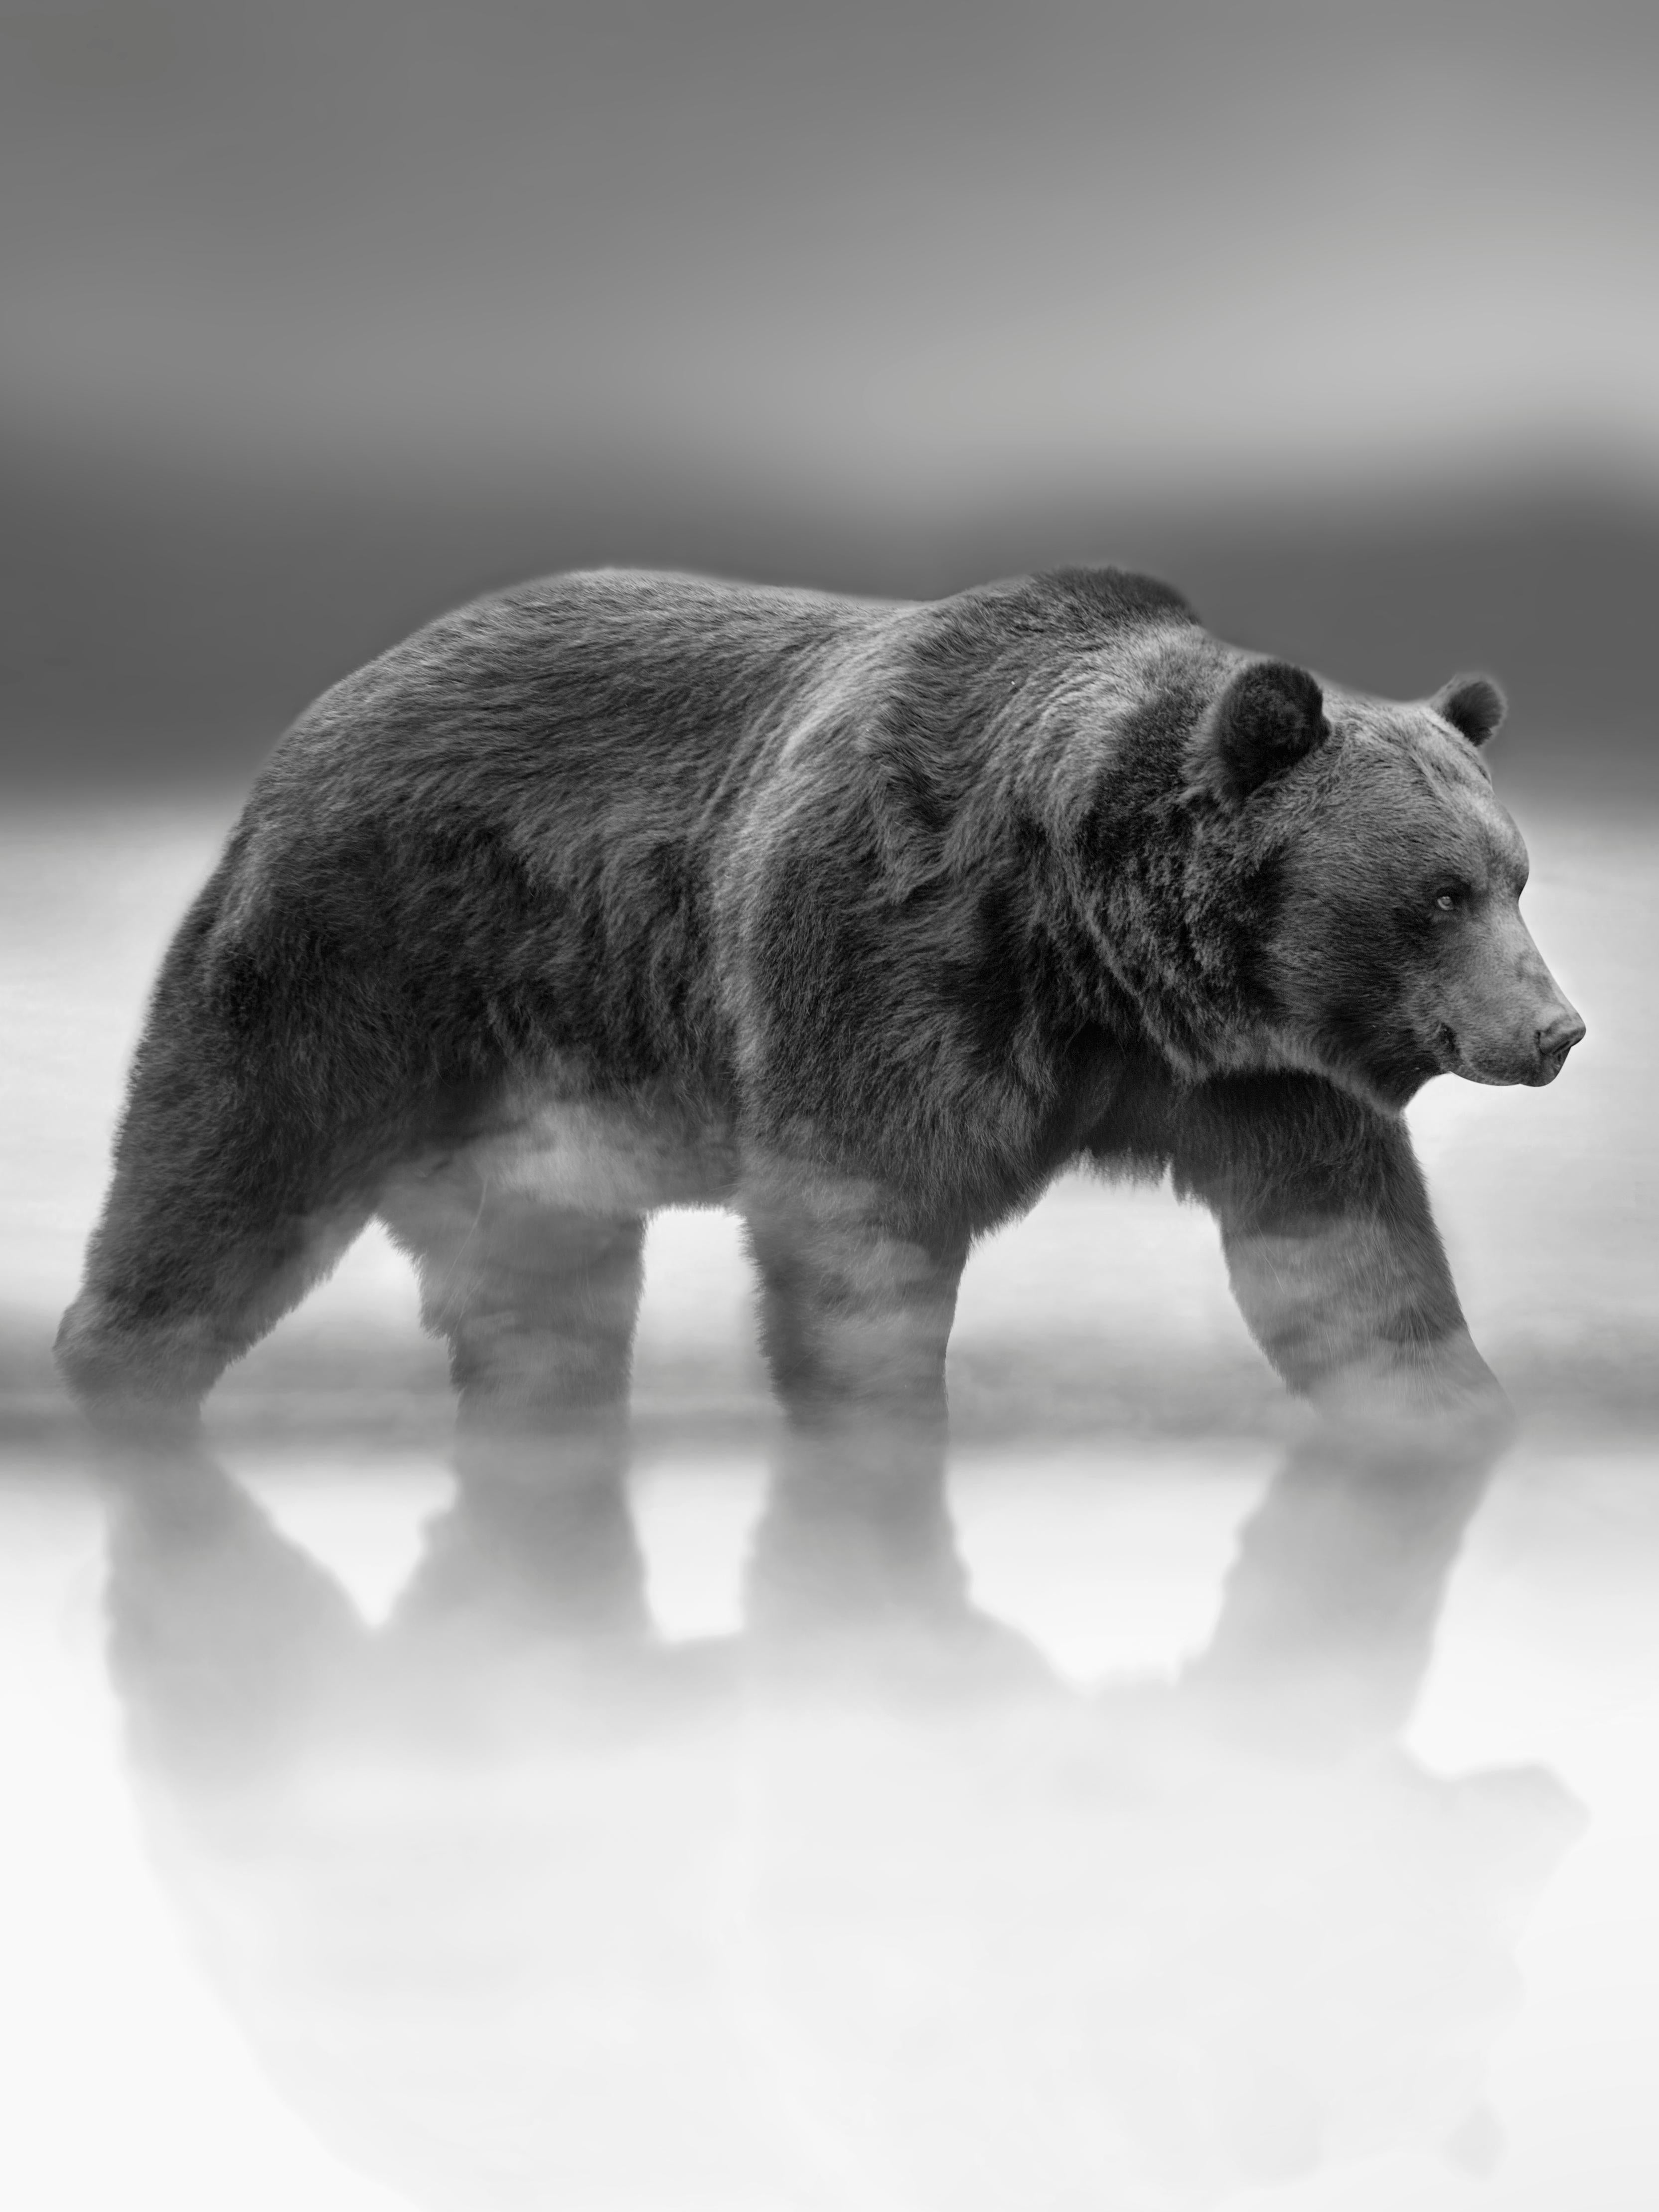 Black and White Photograph Shane Russeck - Photographie - Ours en noir et blanc, photographie d'ours Kodiak Grizzly Bear Wildlife 60x50